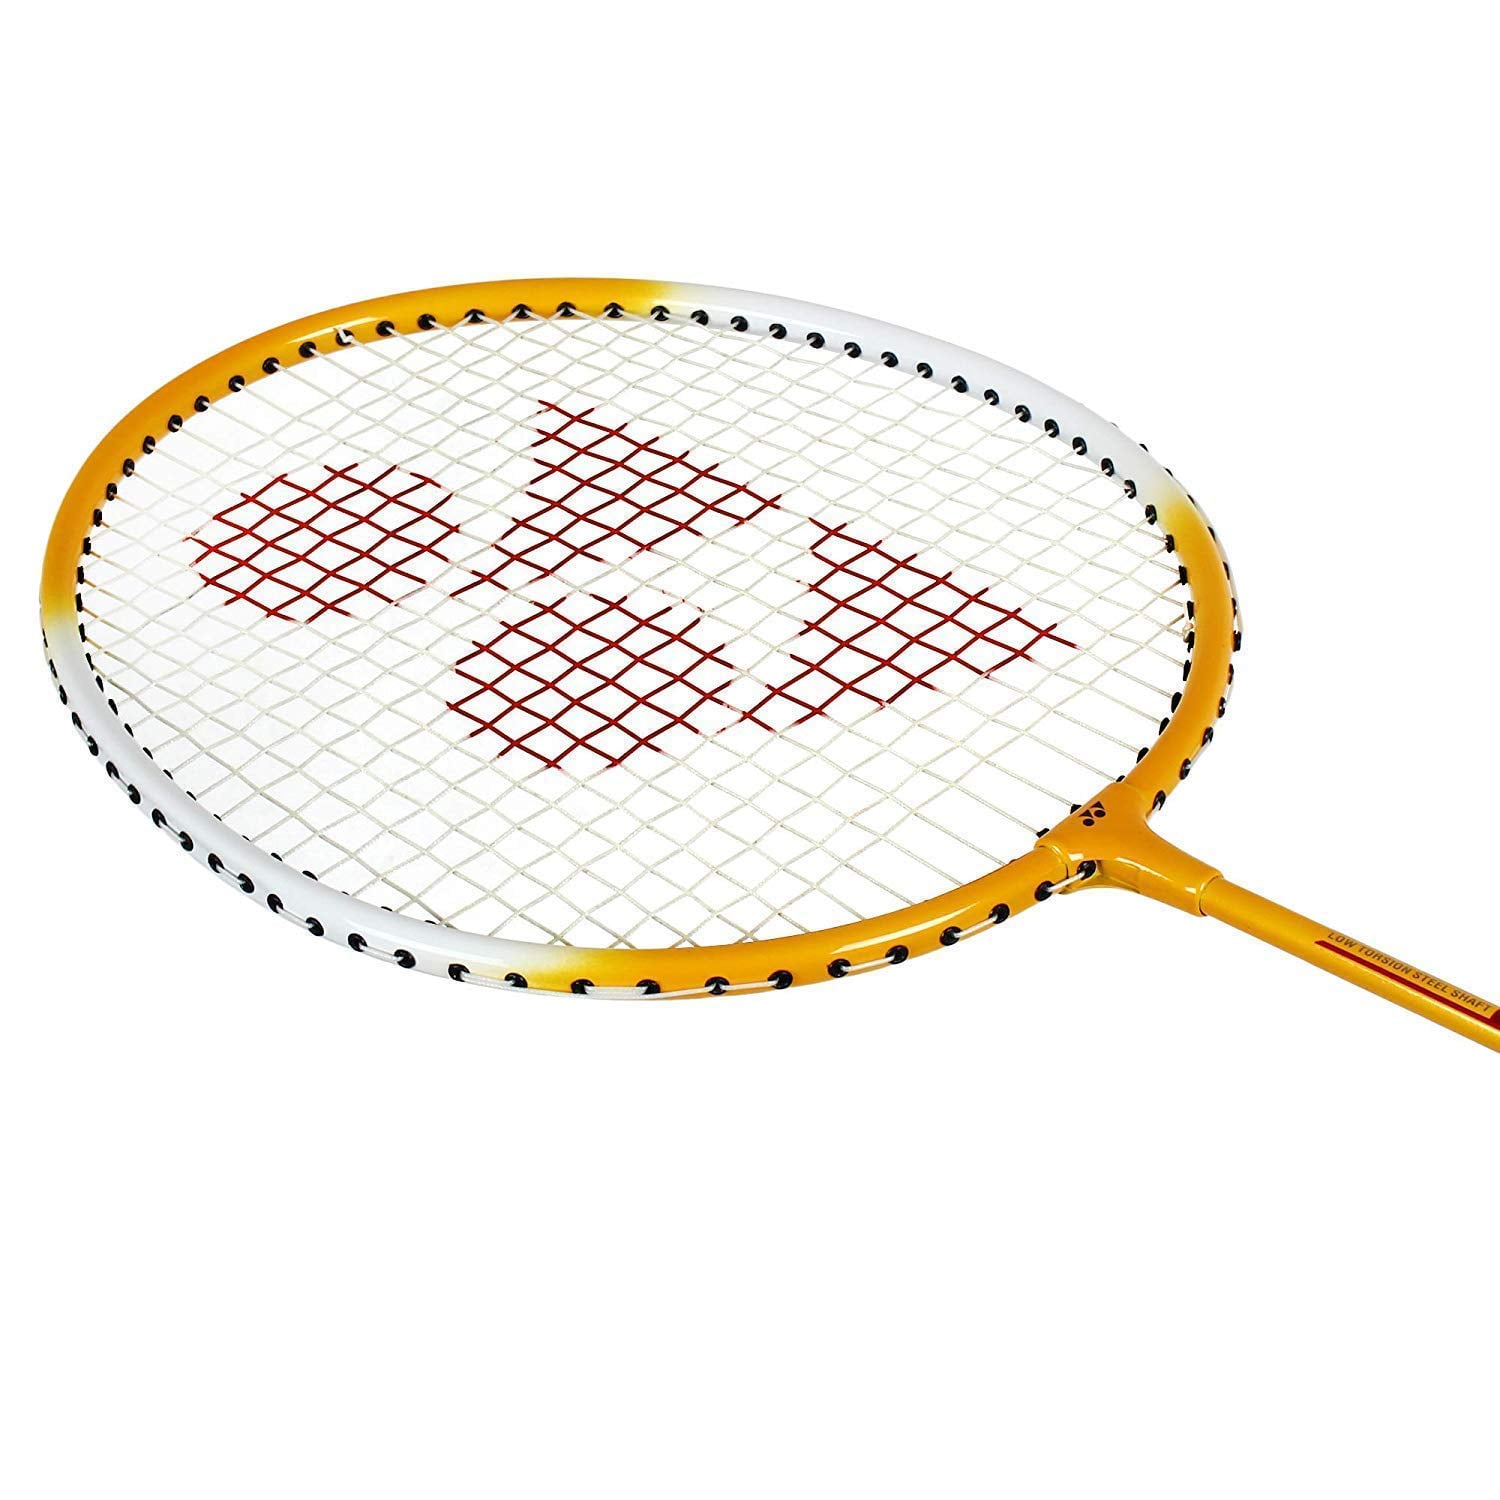 Yonex GR 303 Aluminium Blend Badminton Racquet with Full Cover, Yellow Set of 2